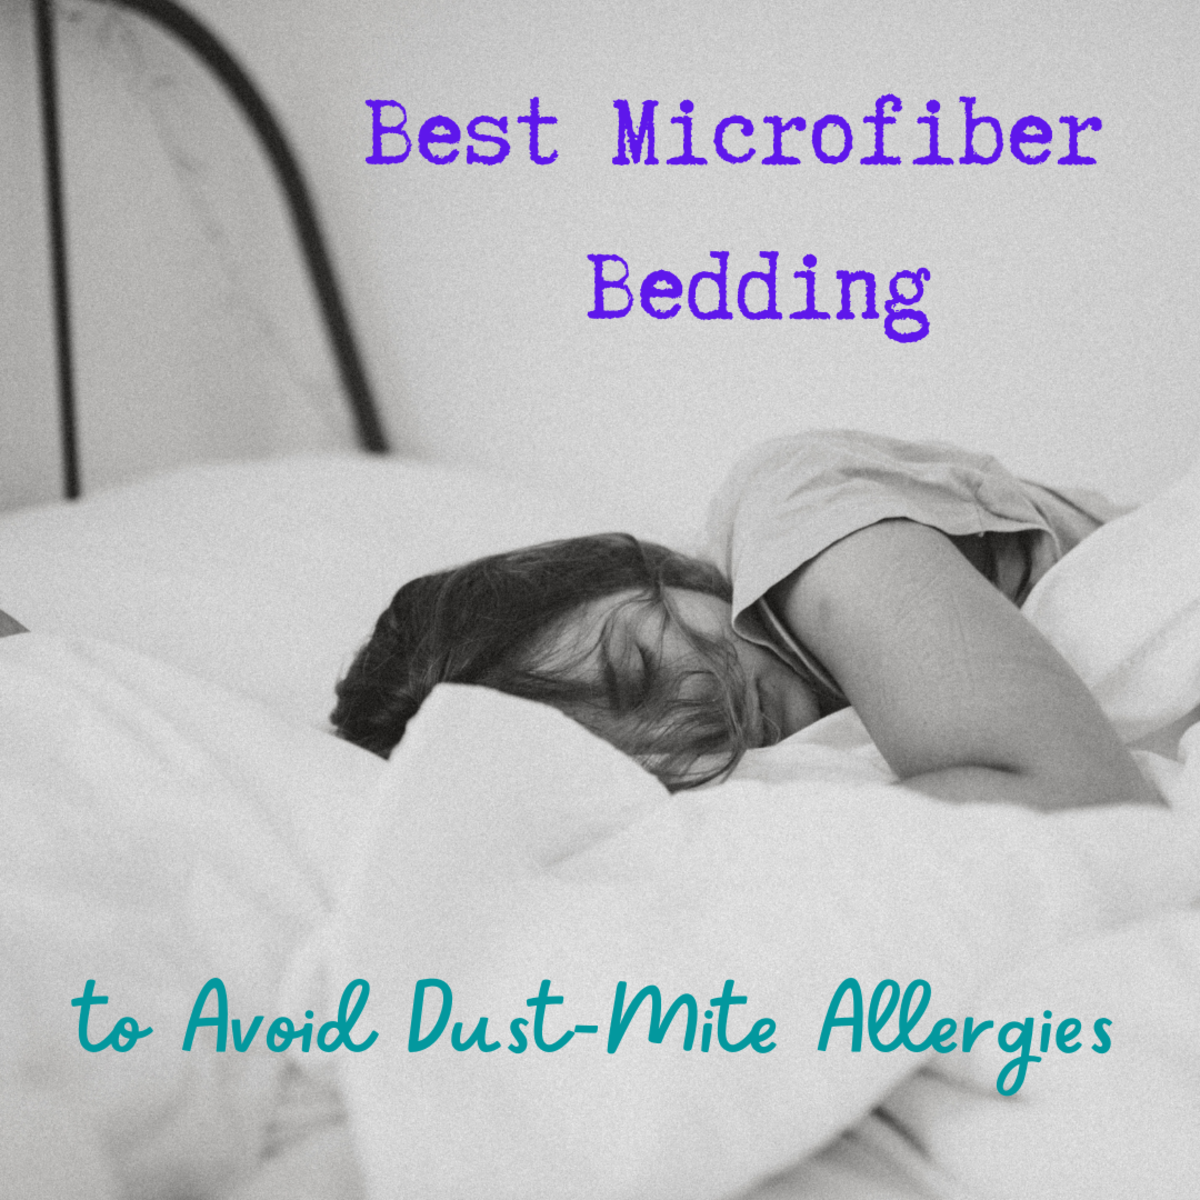 The Best Microfiber Bedding to Avoid Dust-Mite Allergies